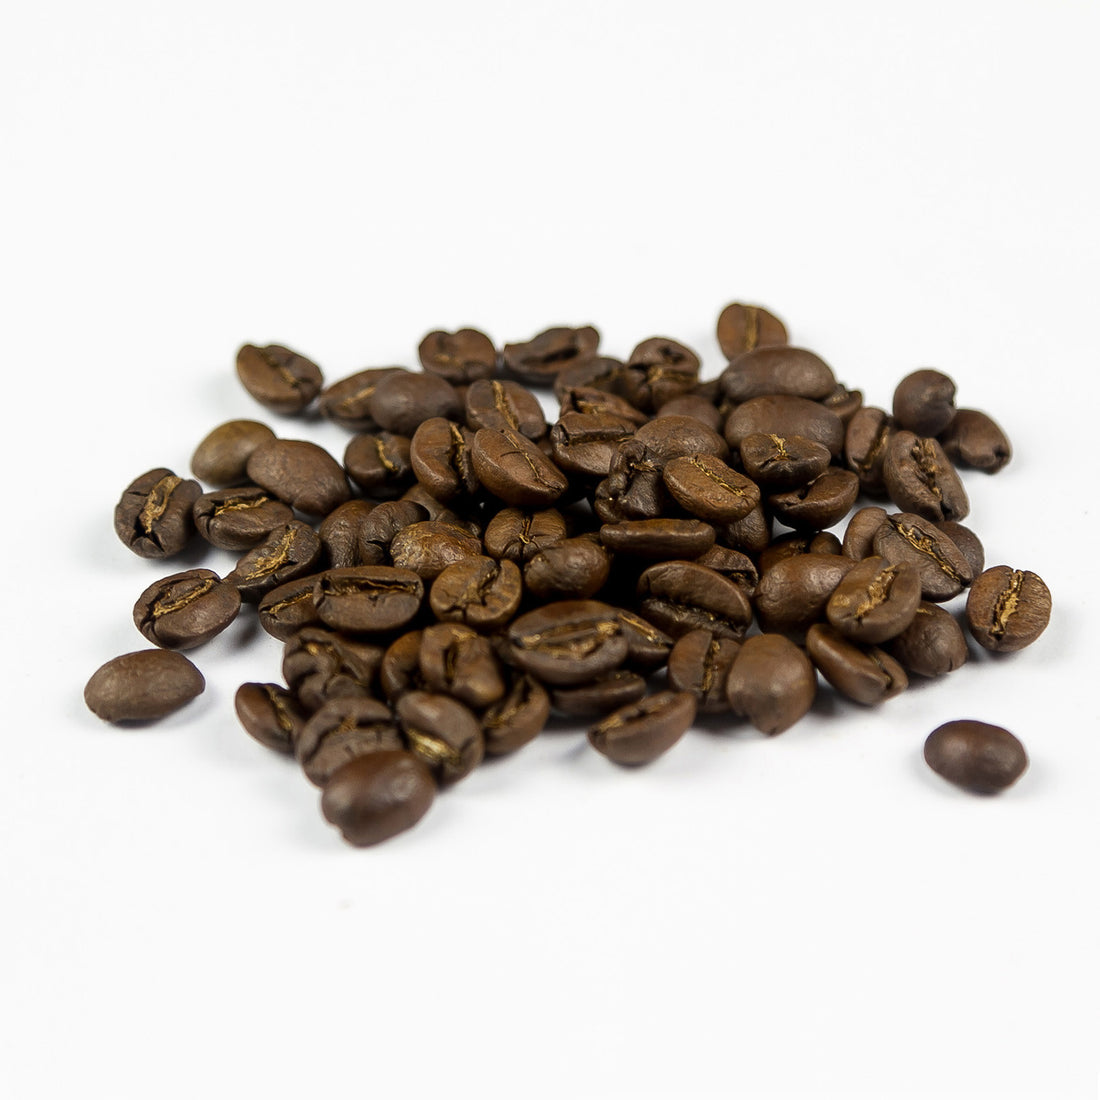 Redber, BRAZIL IPANEMA YELLOW CATUAI - Medium-Dark Roast Coffee, Redber Coffee